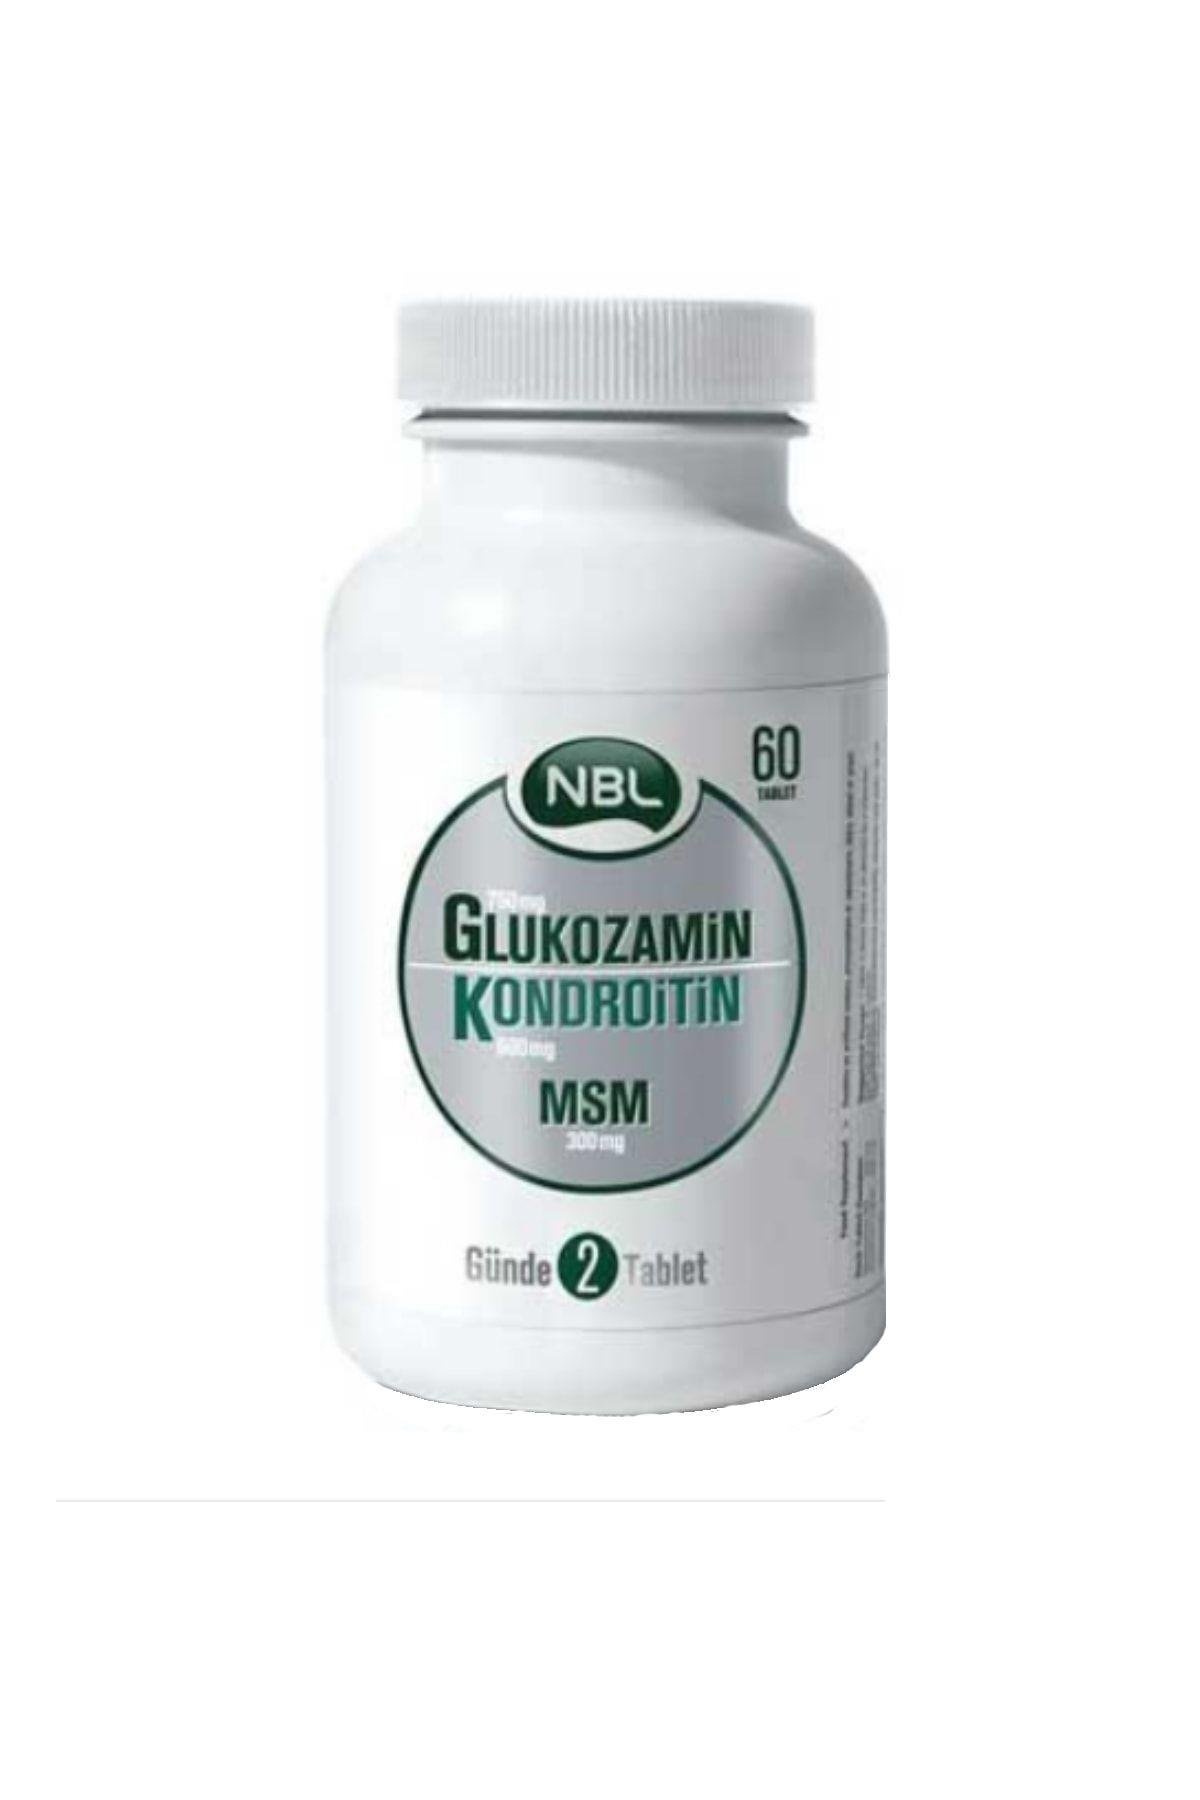 NBL Glukozamin Kondroitin MSM 300mg 60 Tablet | Farma Ucuz